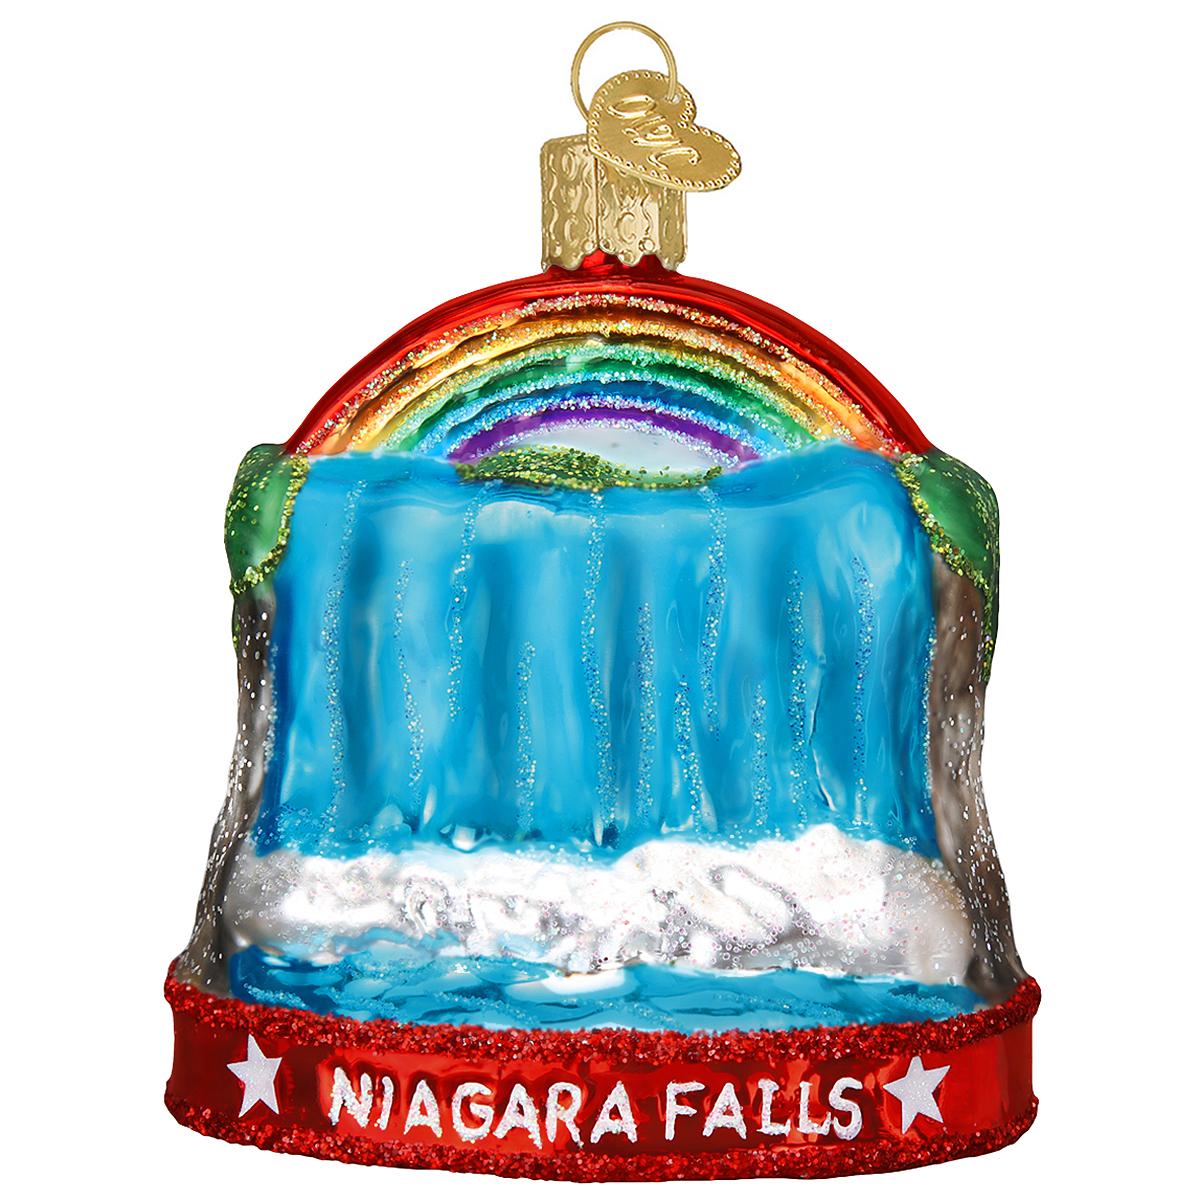 Niagara Falls Glass Ornament